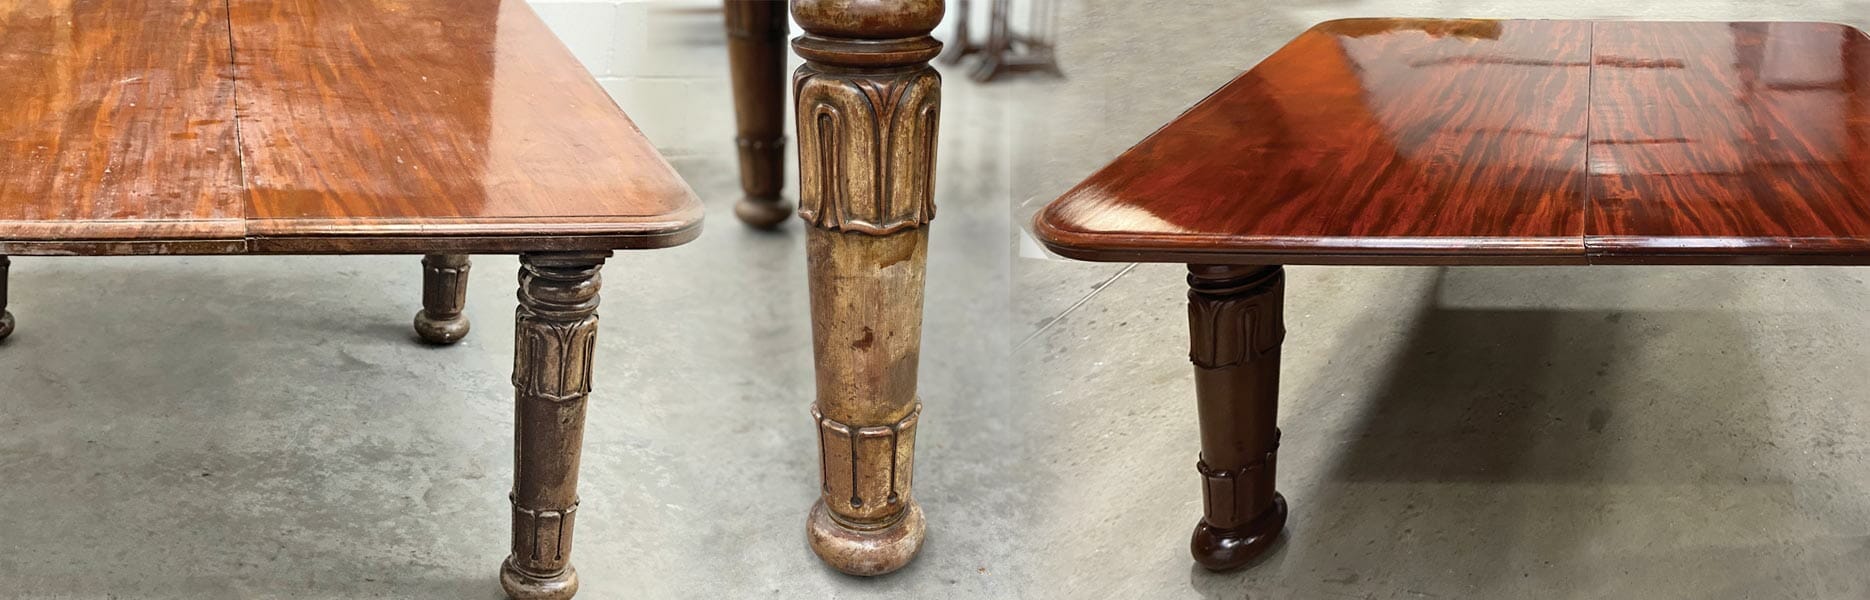 french polishing on table and leg